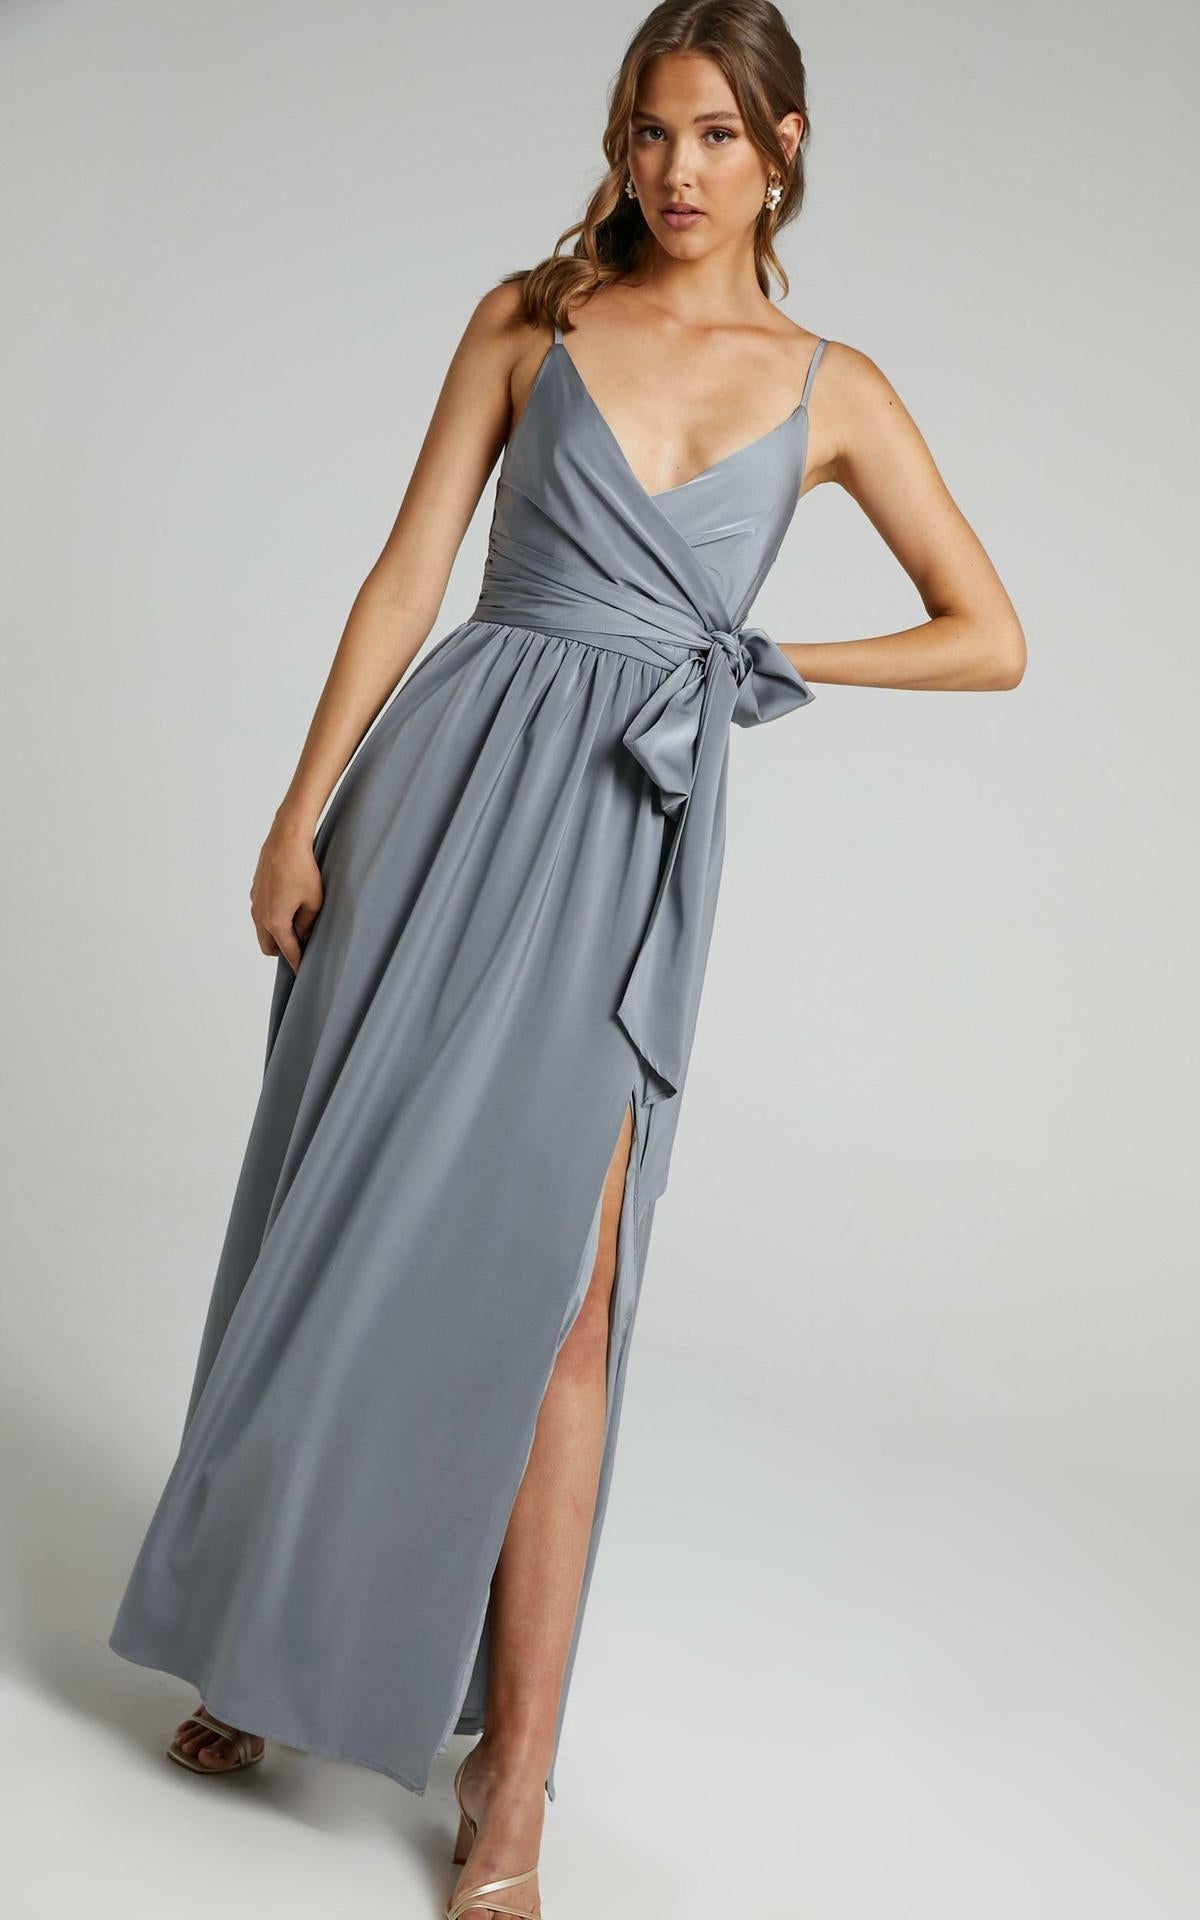 Sexy Satin Sleeveless Party Dresses-Dresses-Gray-S-Free Shipping Leatheretro